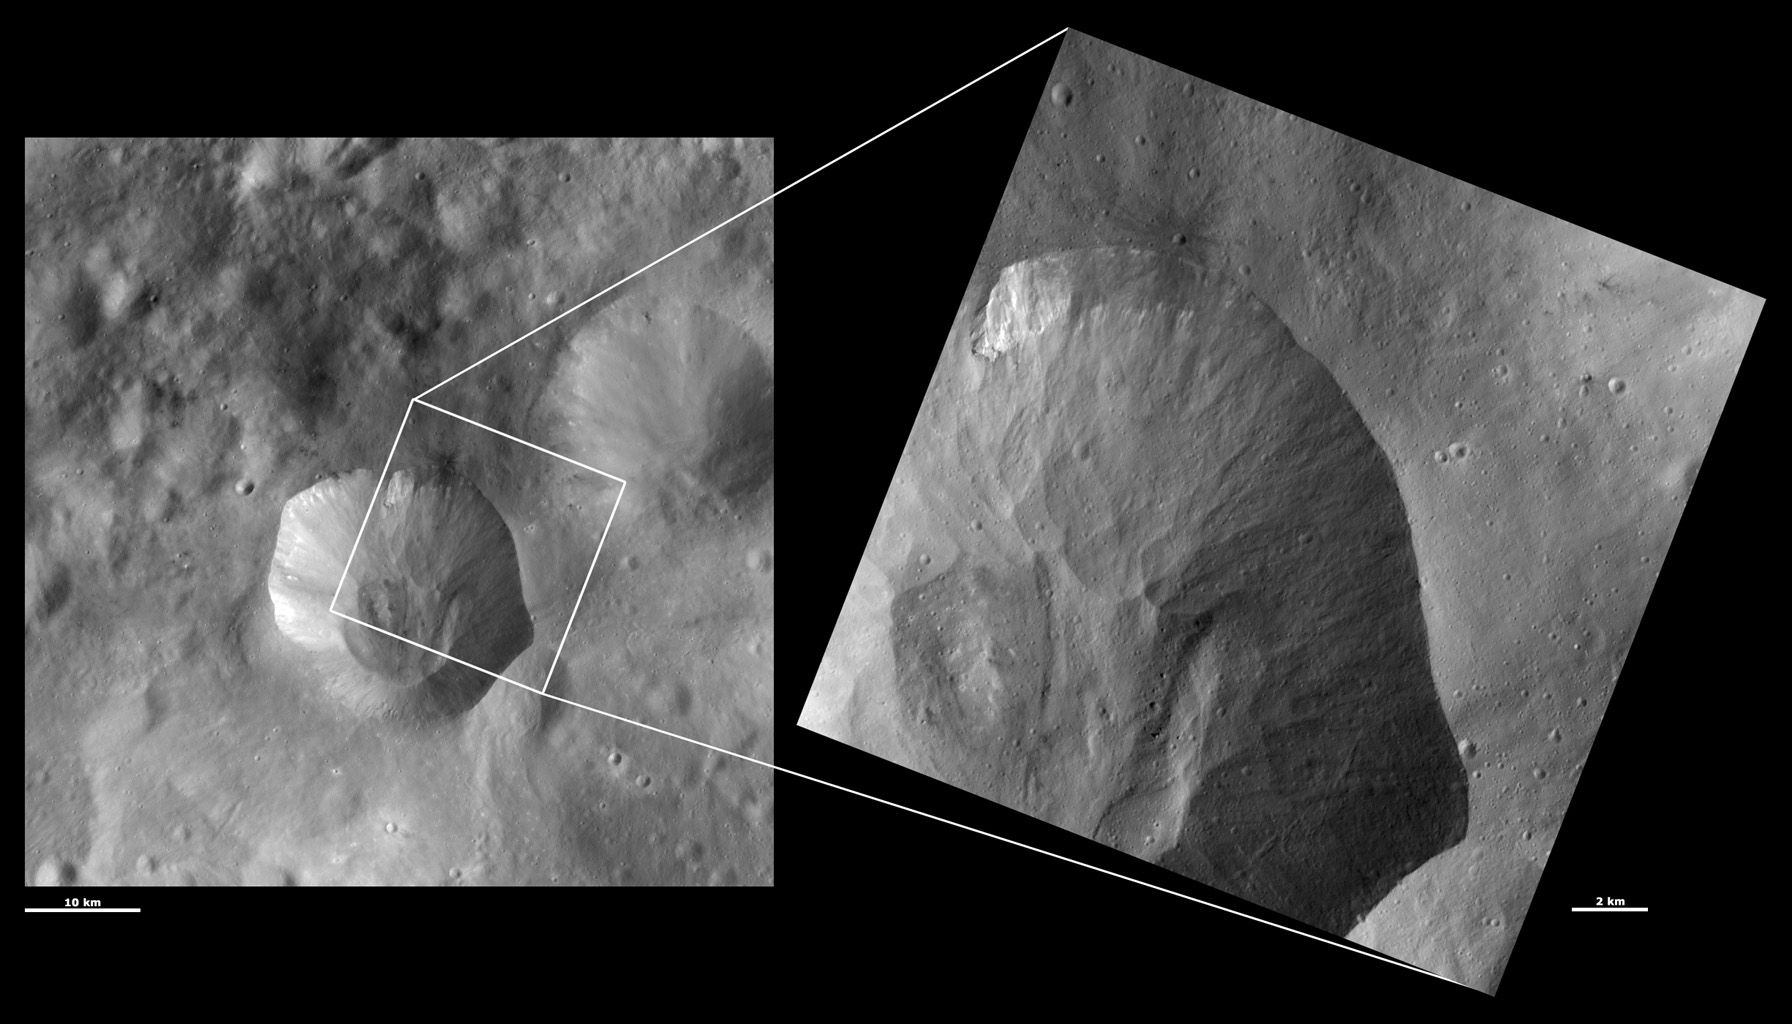 HAMO and LAMO Images of Drusilla Crater